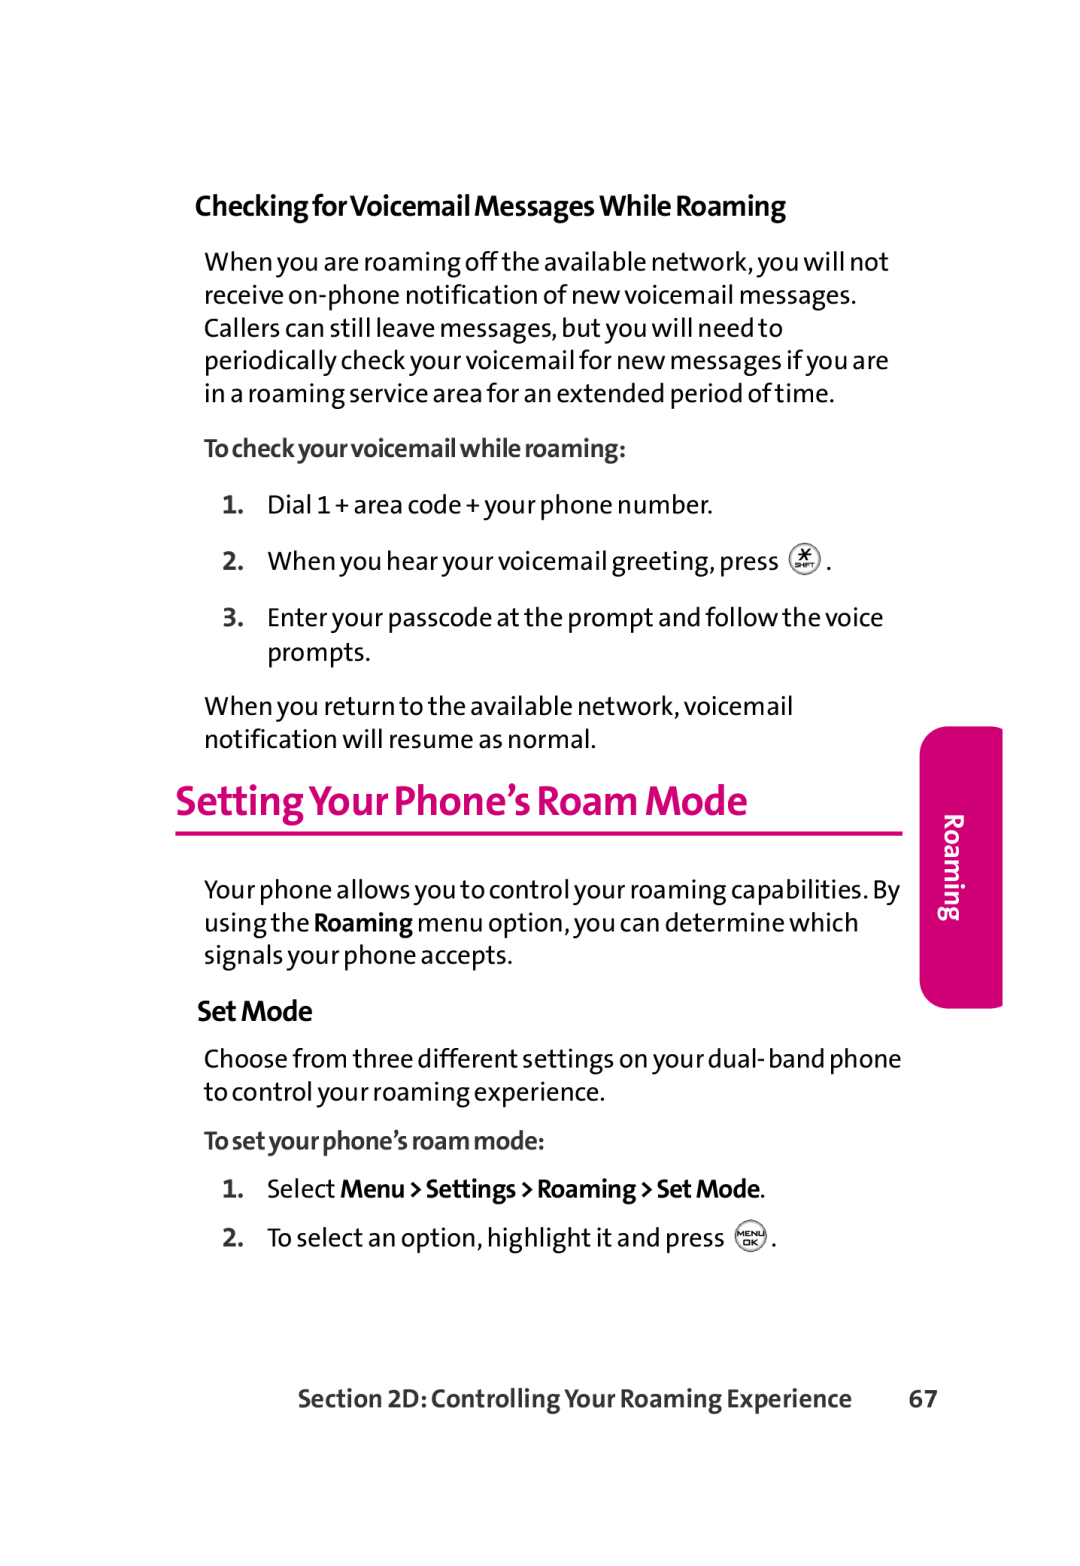 LG Electronics 350 manual SettingYour Phone’s Roam Mode, CheckingforVoicemailMessagesWhileRoaming, SetMode 